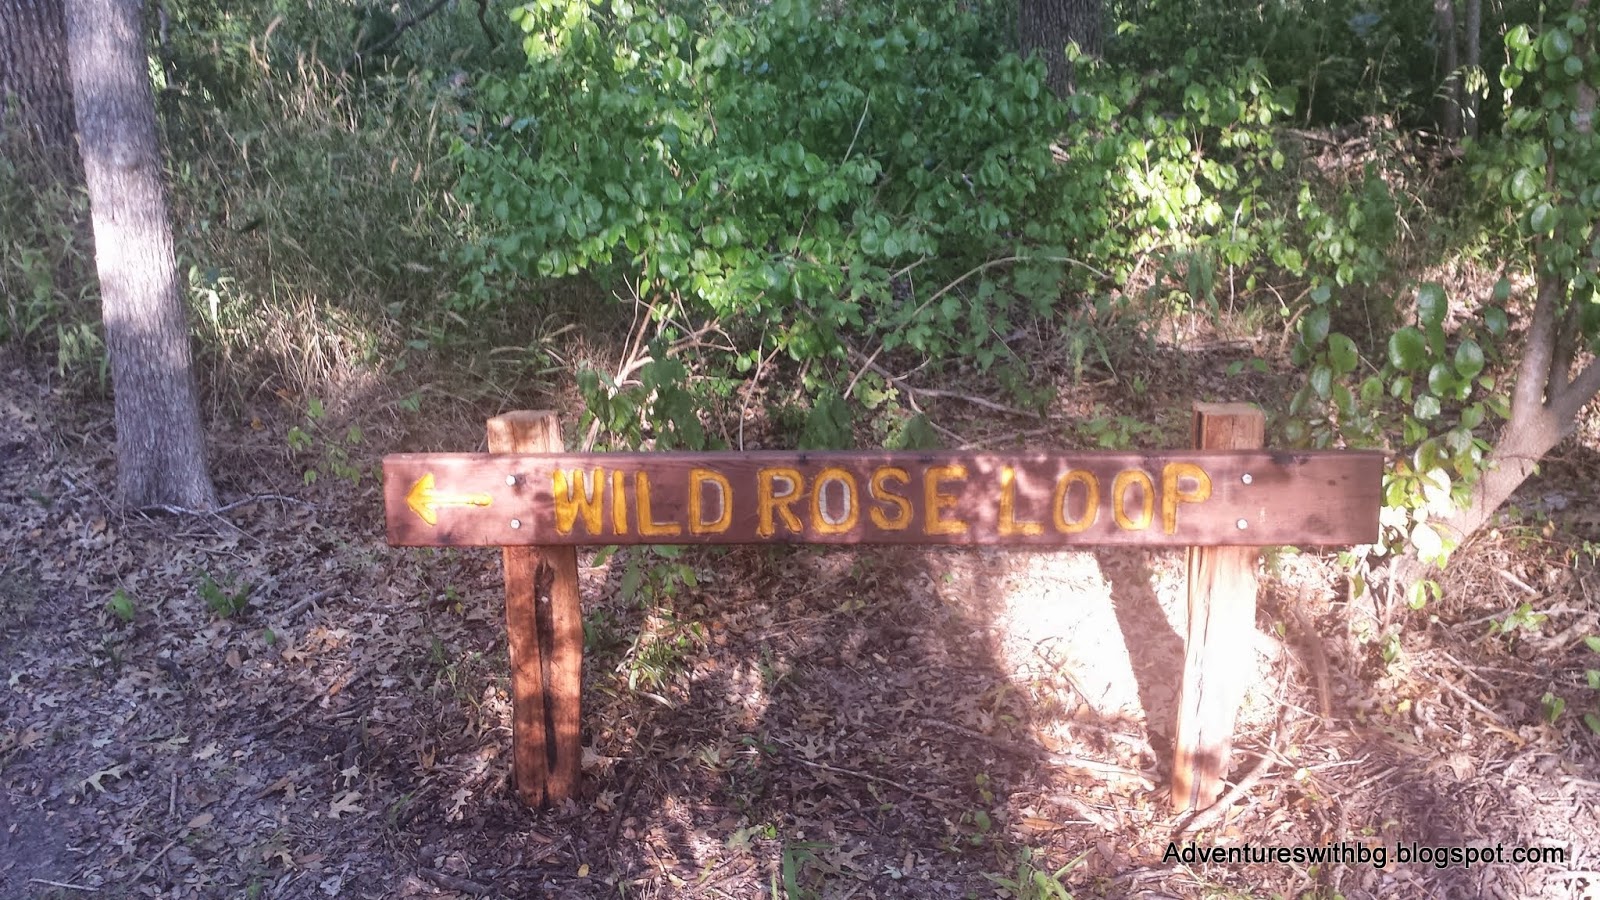 The wild rose loop trailhead at lockhart state park